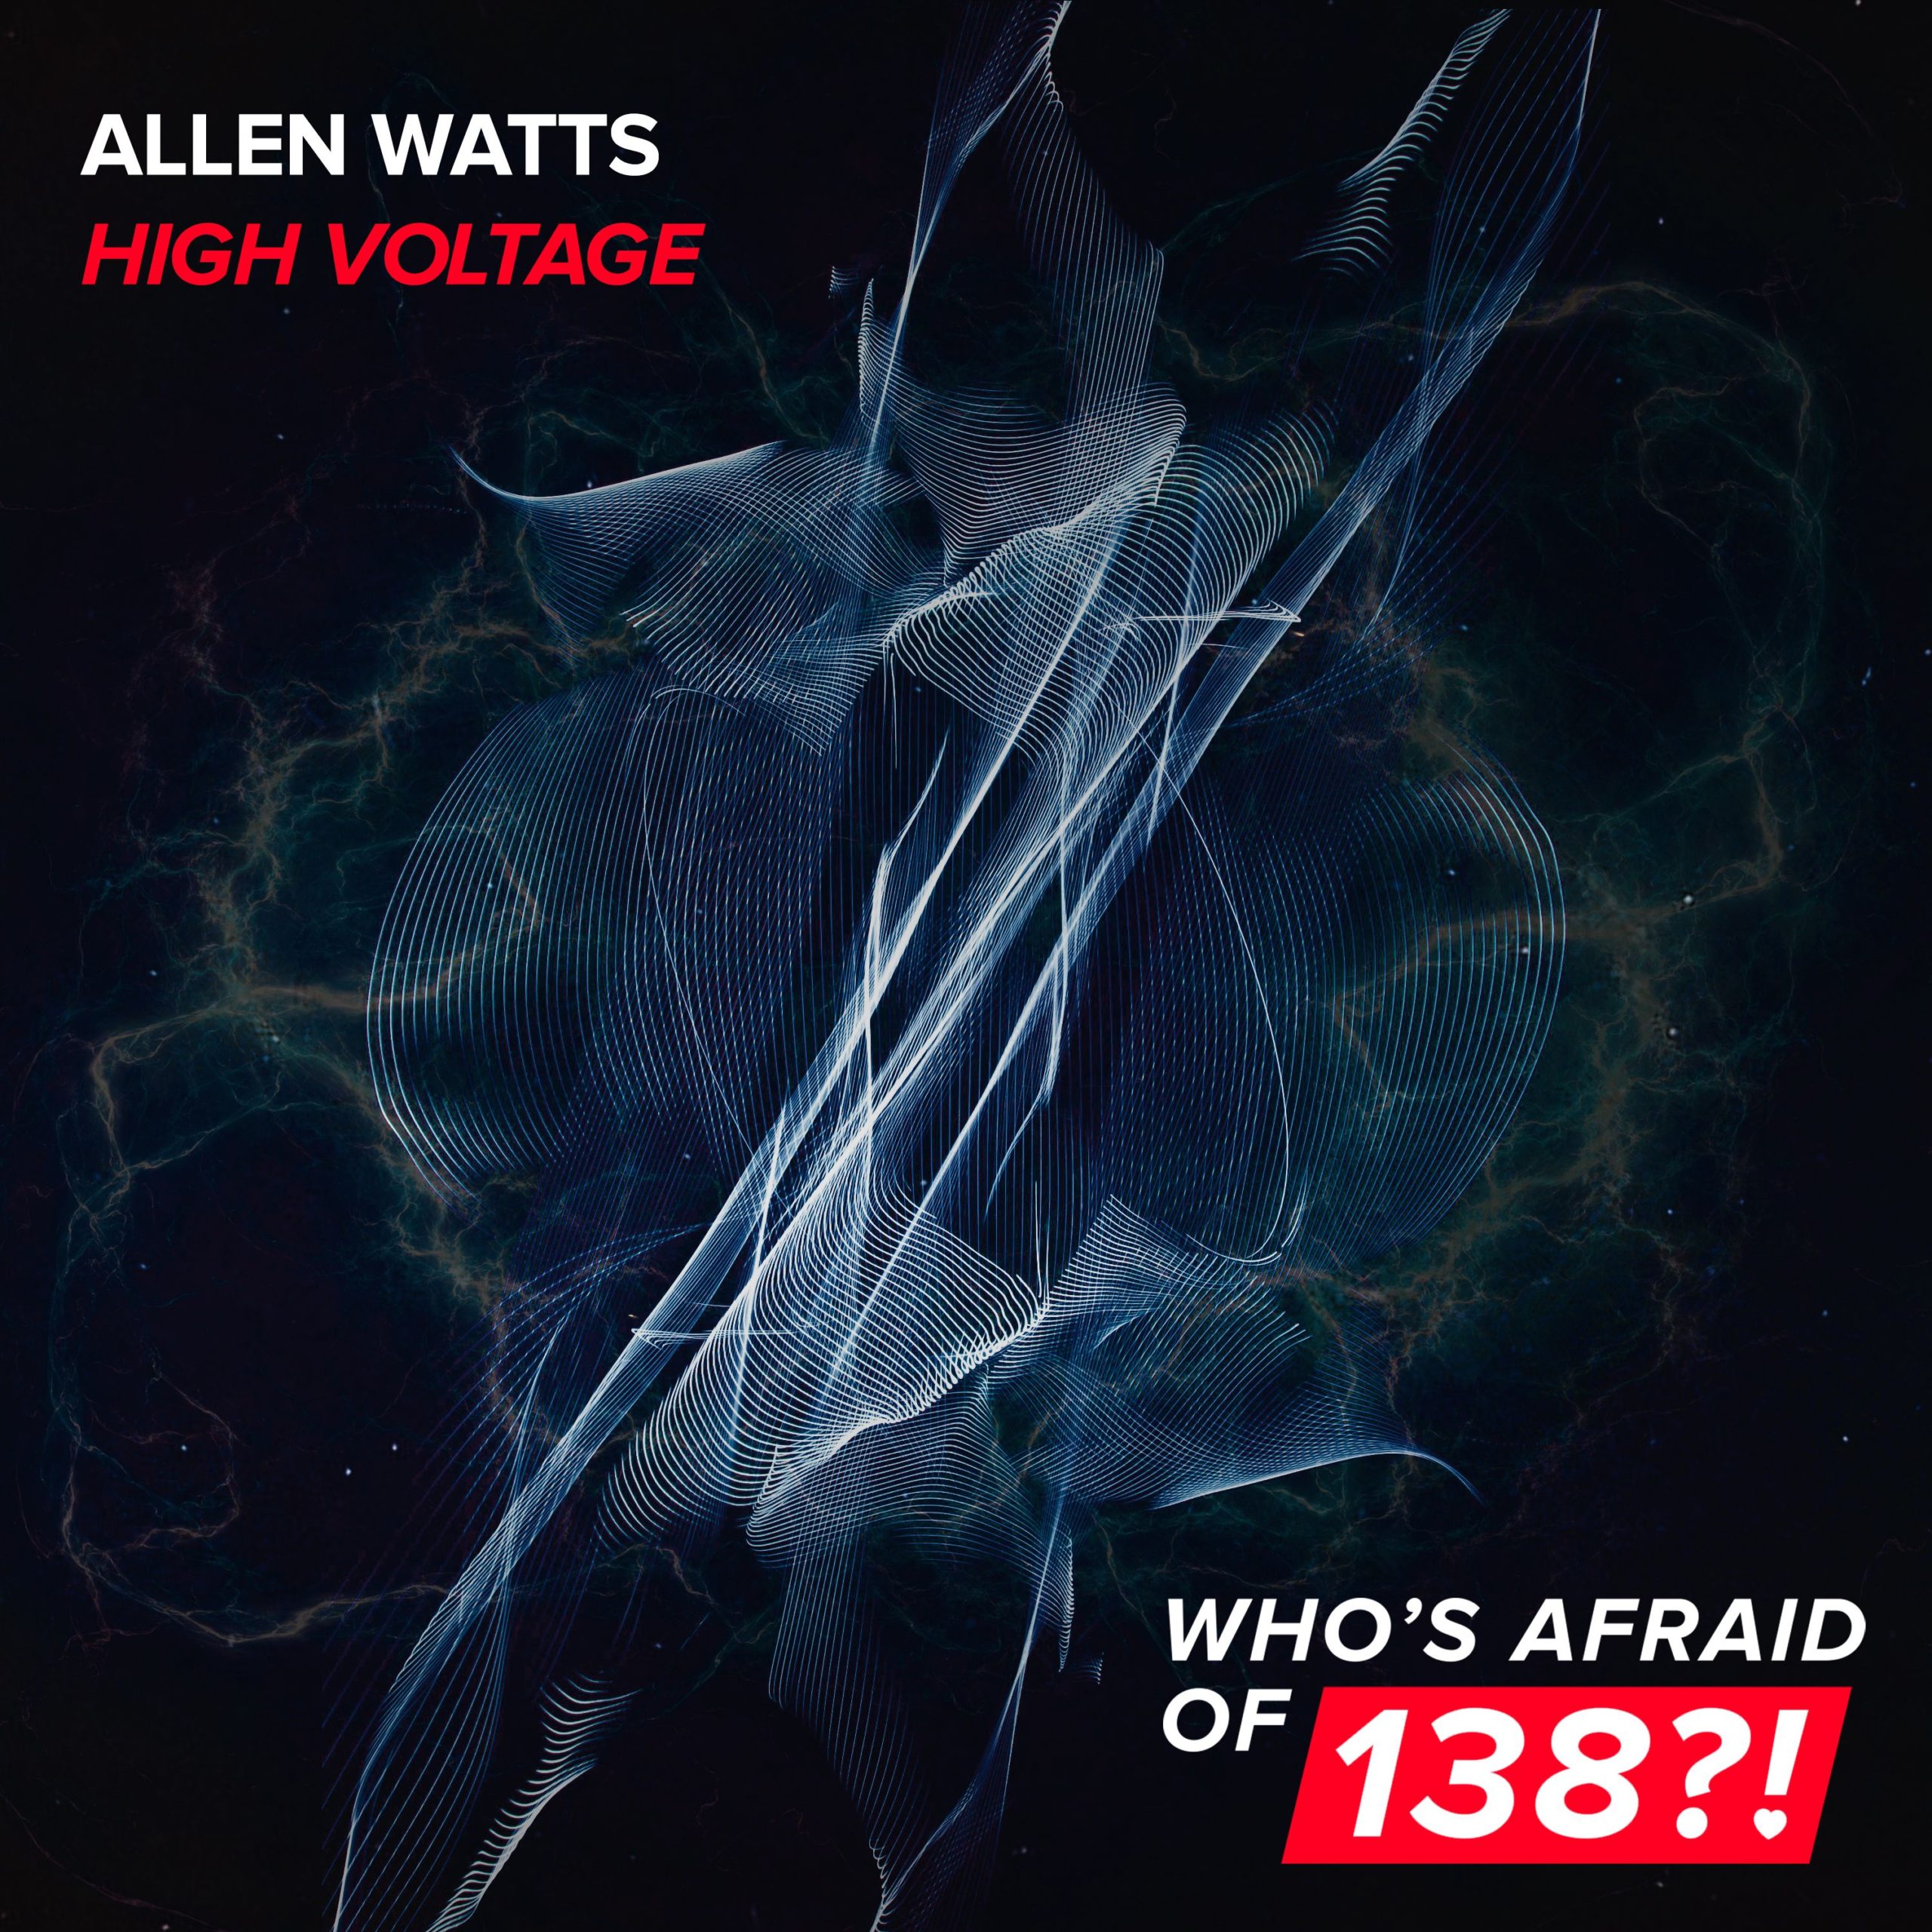 Allen Watts - Impulse. Who's afraid of 138. Allen Watts - Mainframe. Allen Watts Dynamo Extended. Allen watts